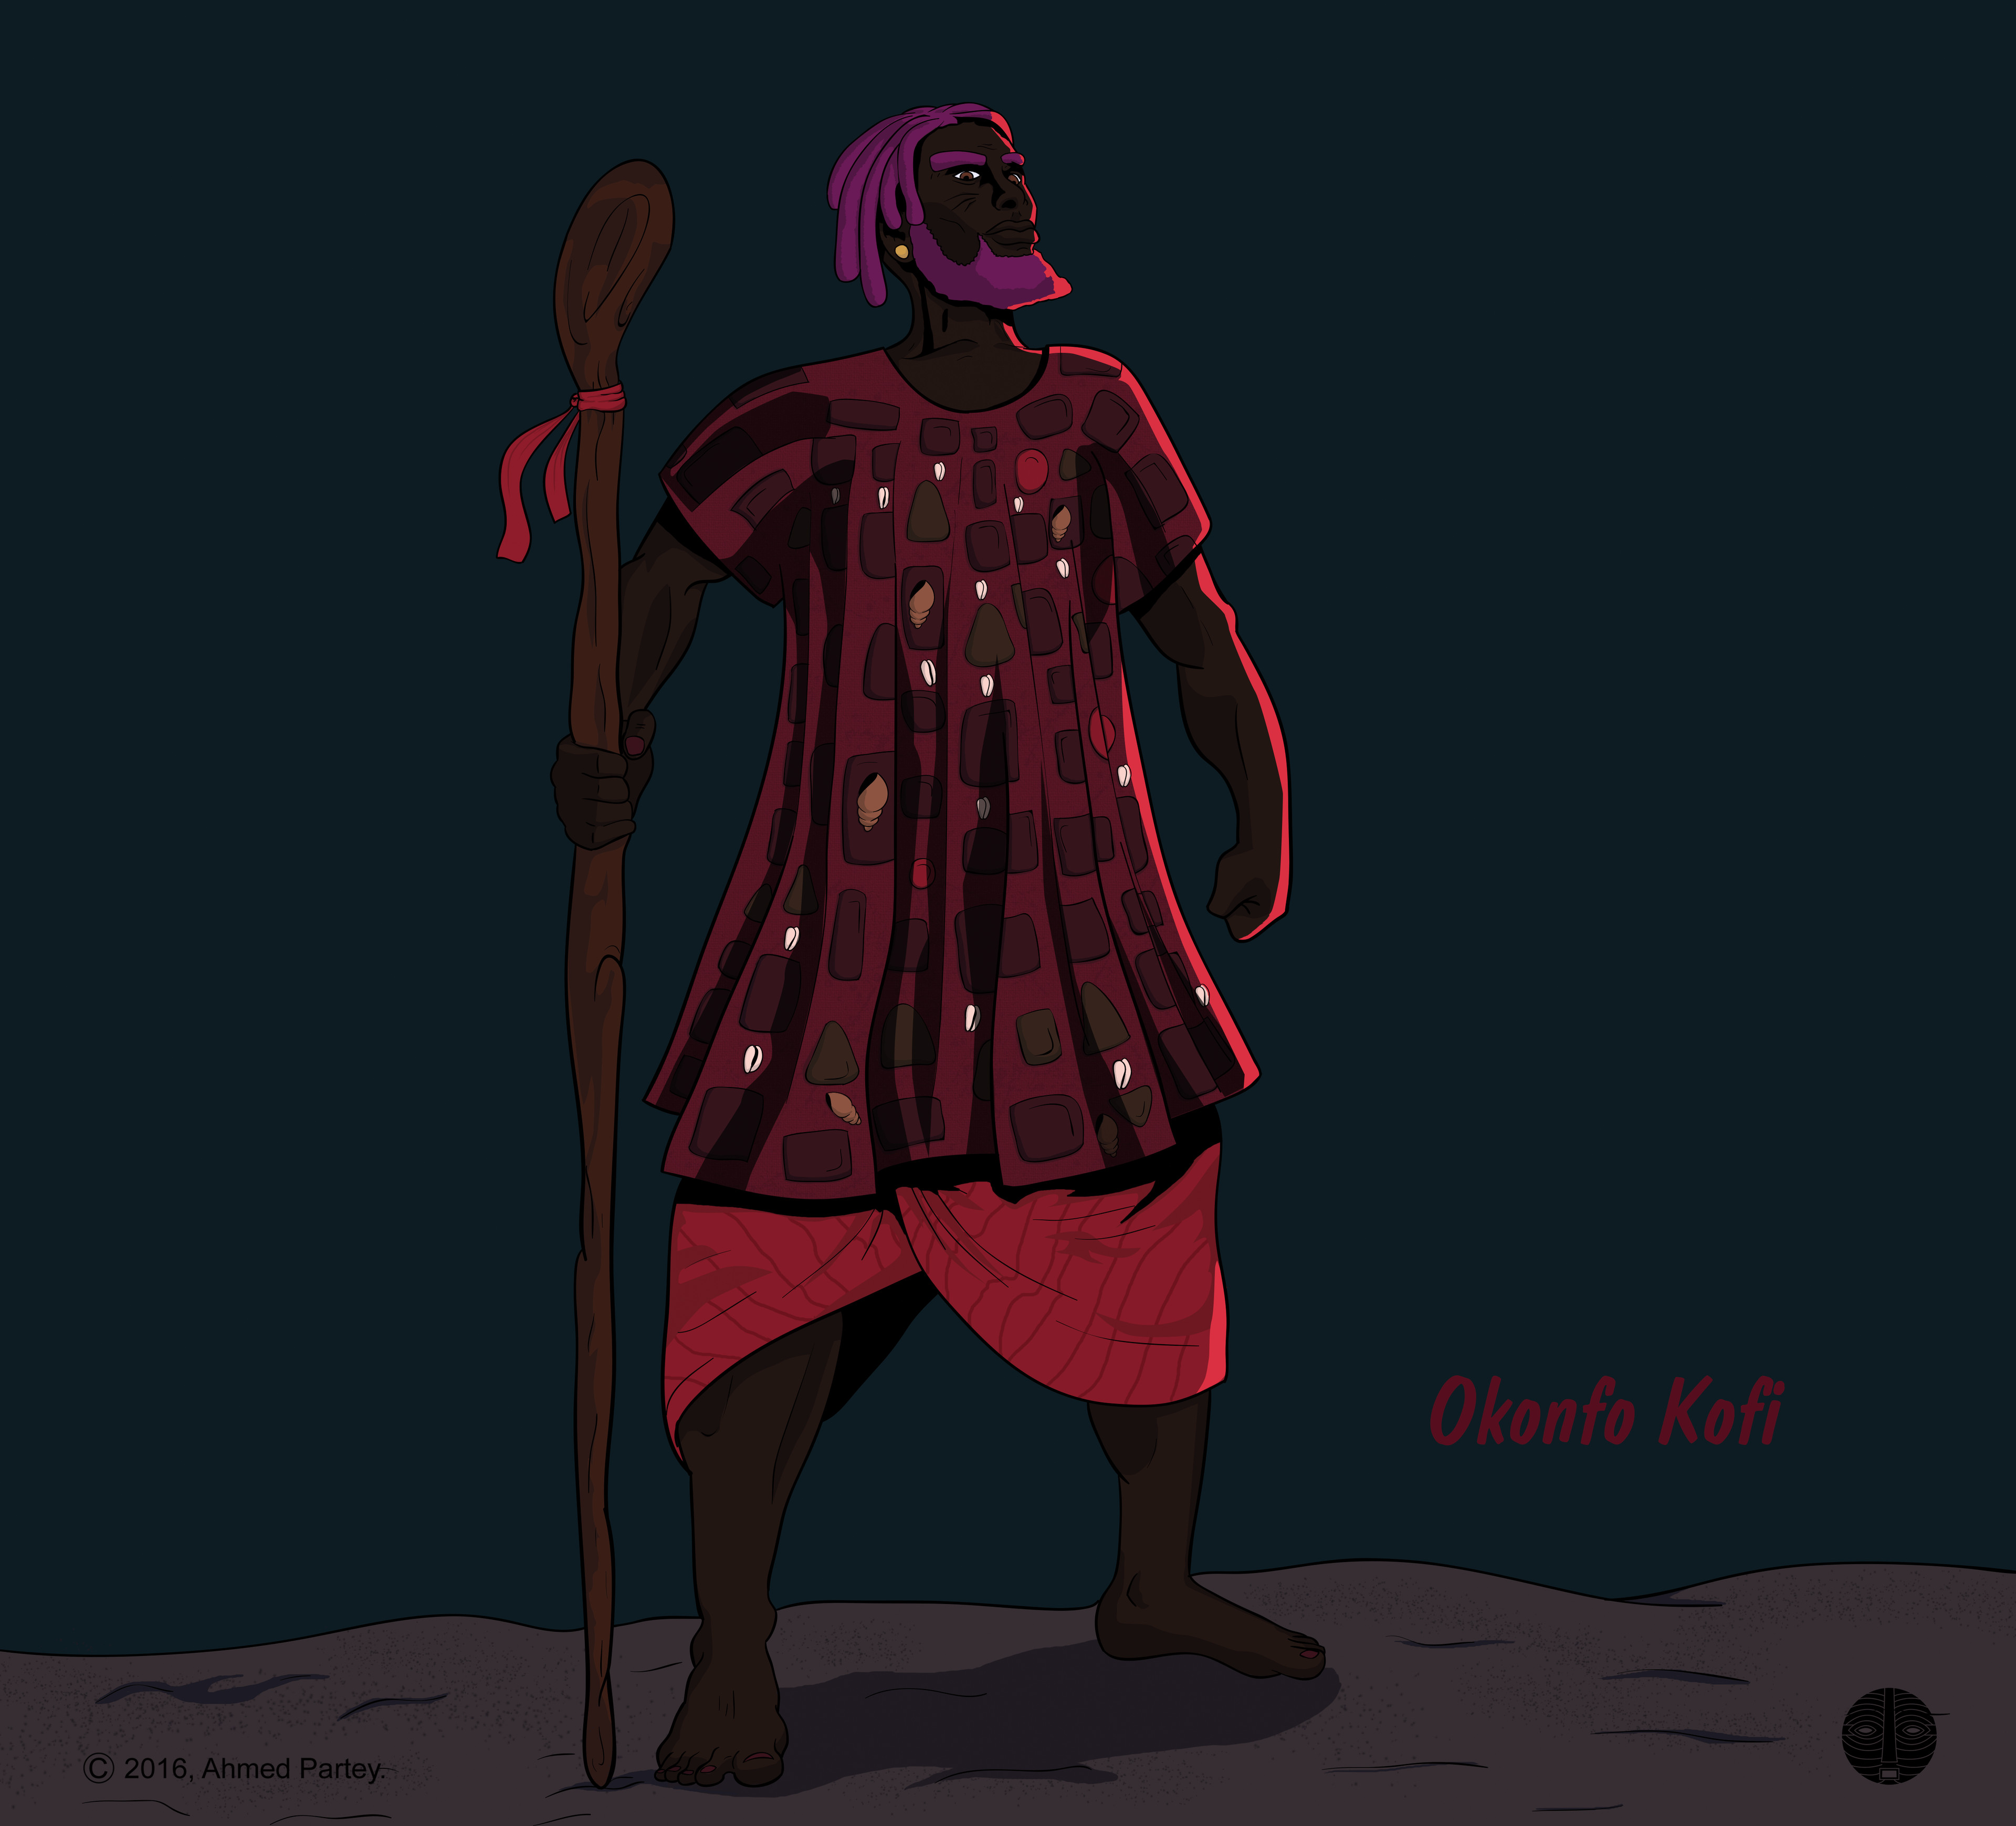 Warriors, Okonfo Kofi 